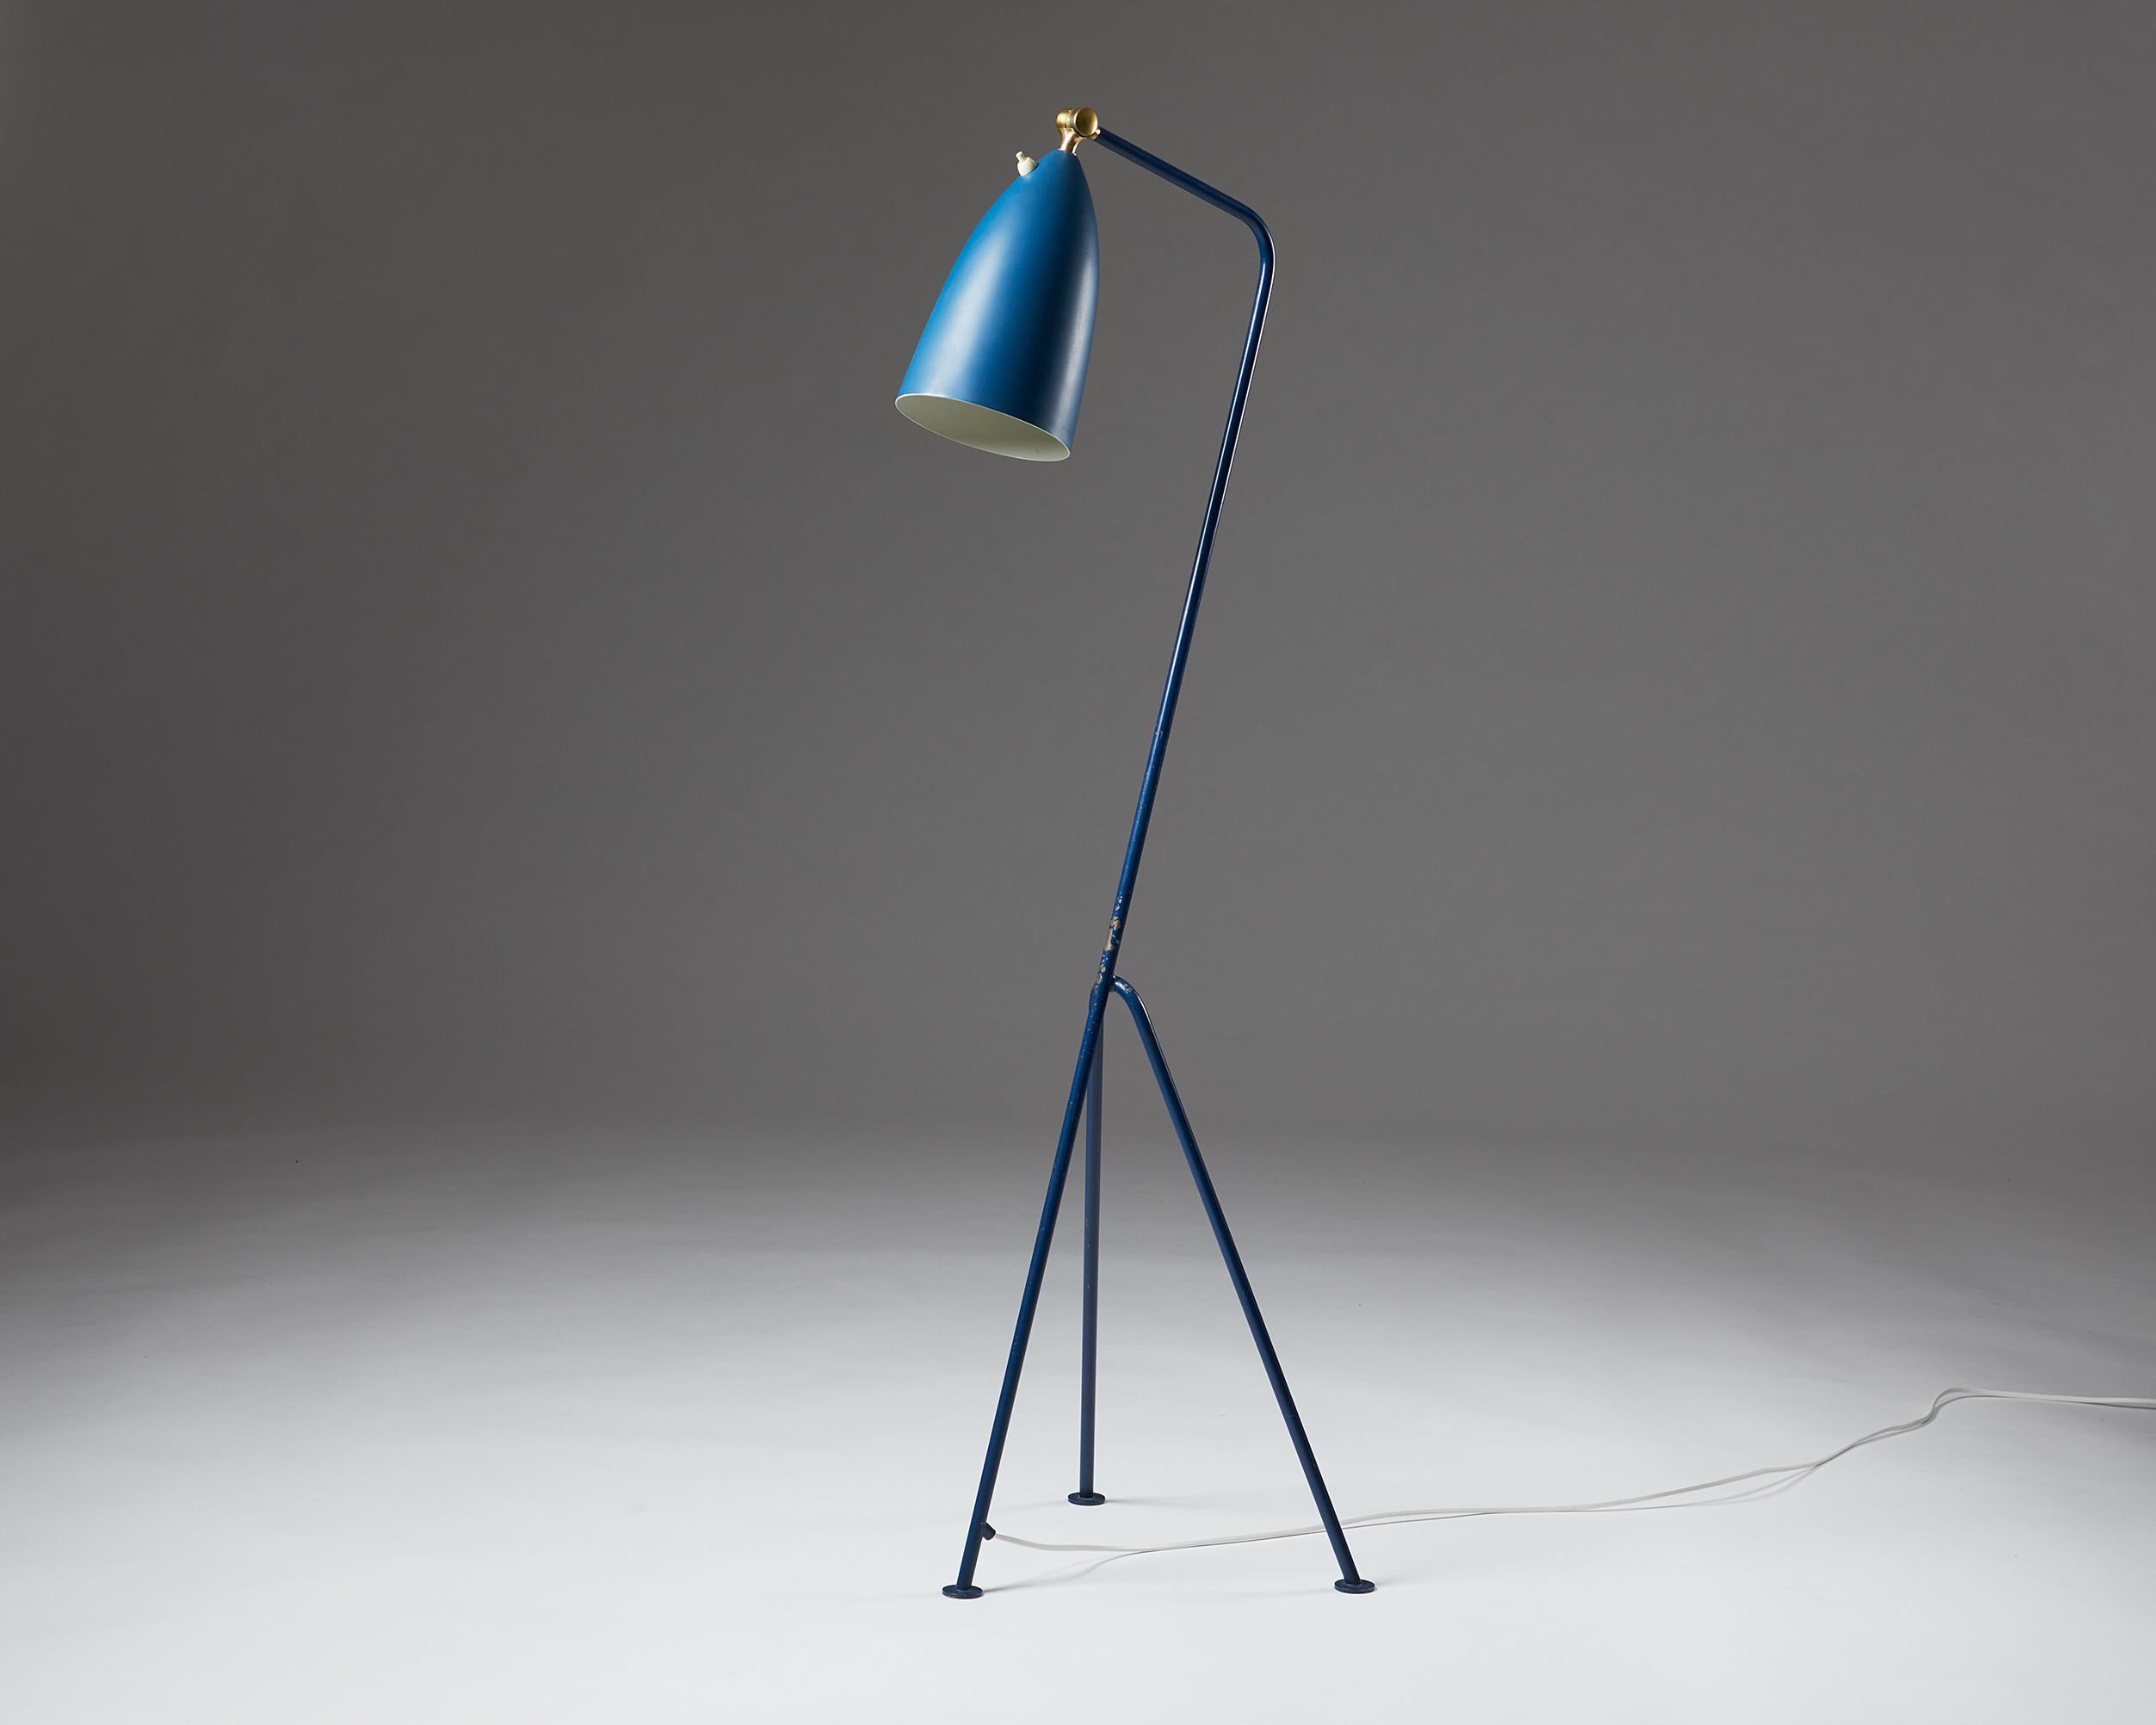 Floor lamp ‘Grasshopper’ model G-33 designed by Greta Magnusson Grossman for Bergboms,
Sweden, ca. 1947-1948.

Lacquered metal.

Rare blue colour.

Marked ‘G-33 BERGBOMS’.

 Greta Magnusson Grossman designed this floor lamp, model G-33, for the